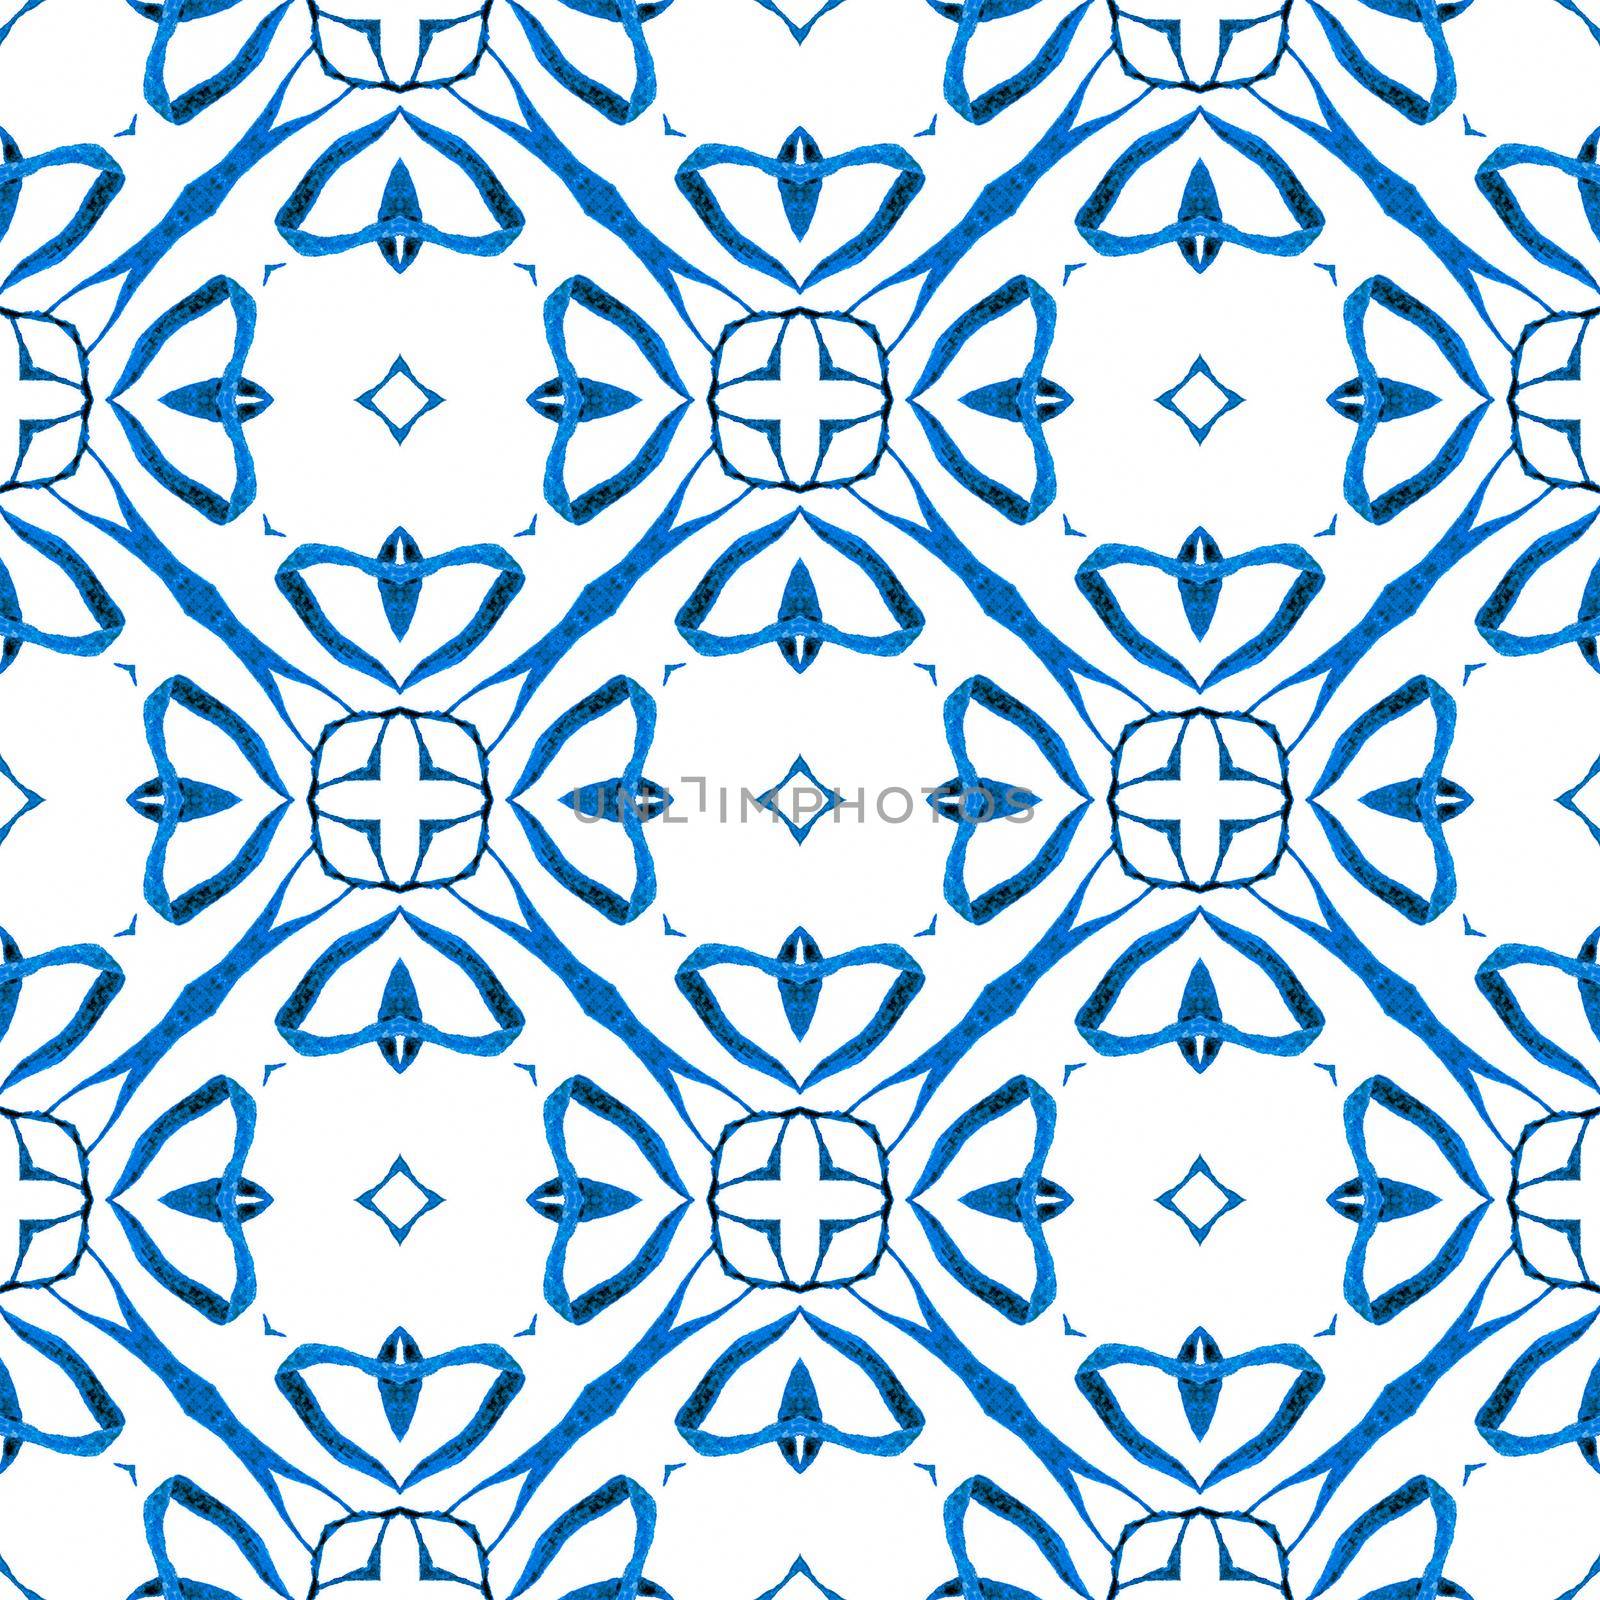 Chevron watercolor pattern. Blue Actual boho chic summer design. Textile ready curious print, swimwear fabric, wallpaper, wrapping. Green geometric chevron watercolor border.